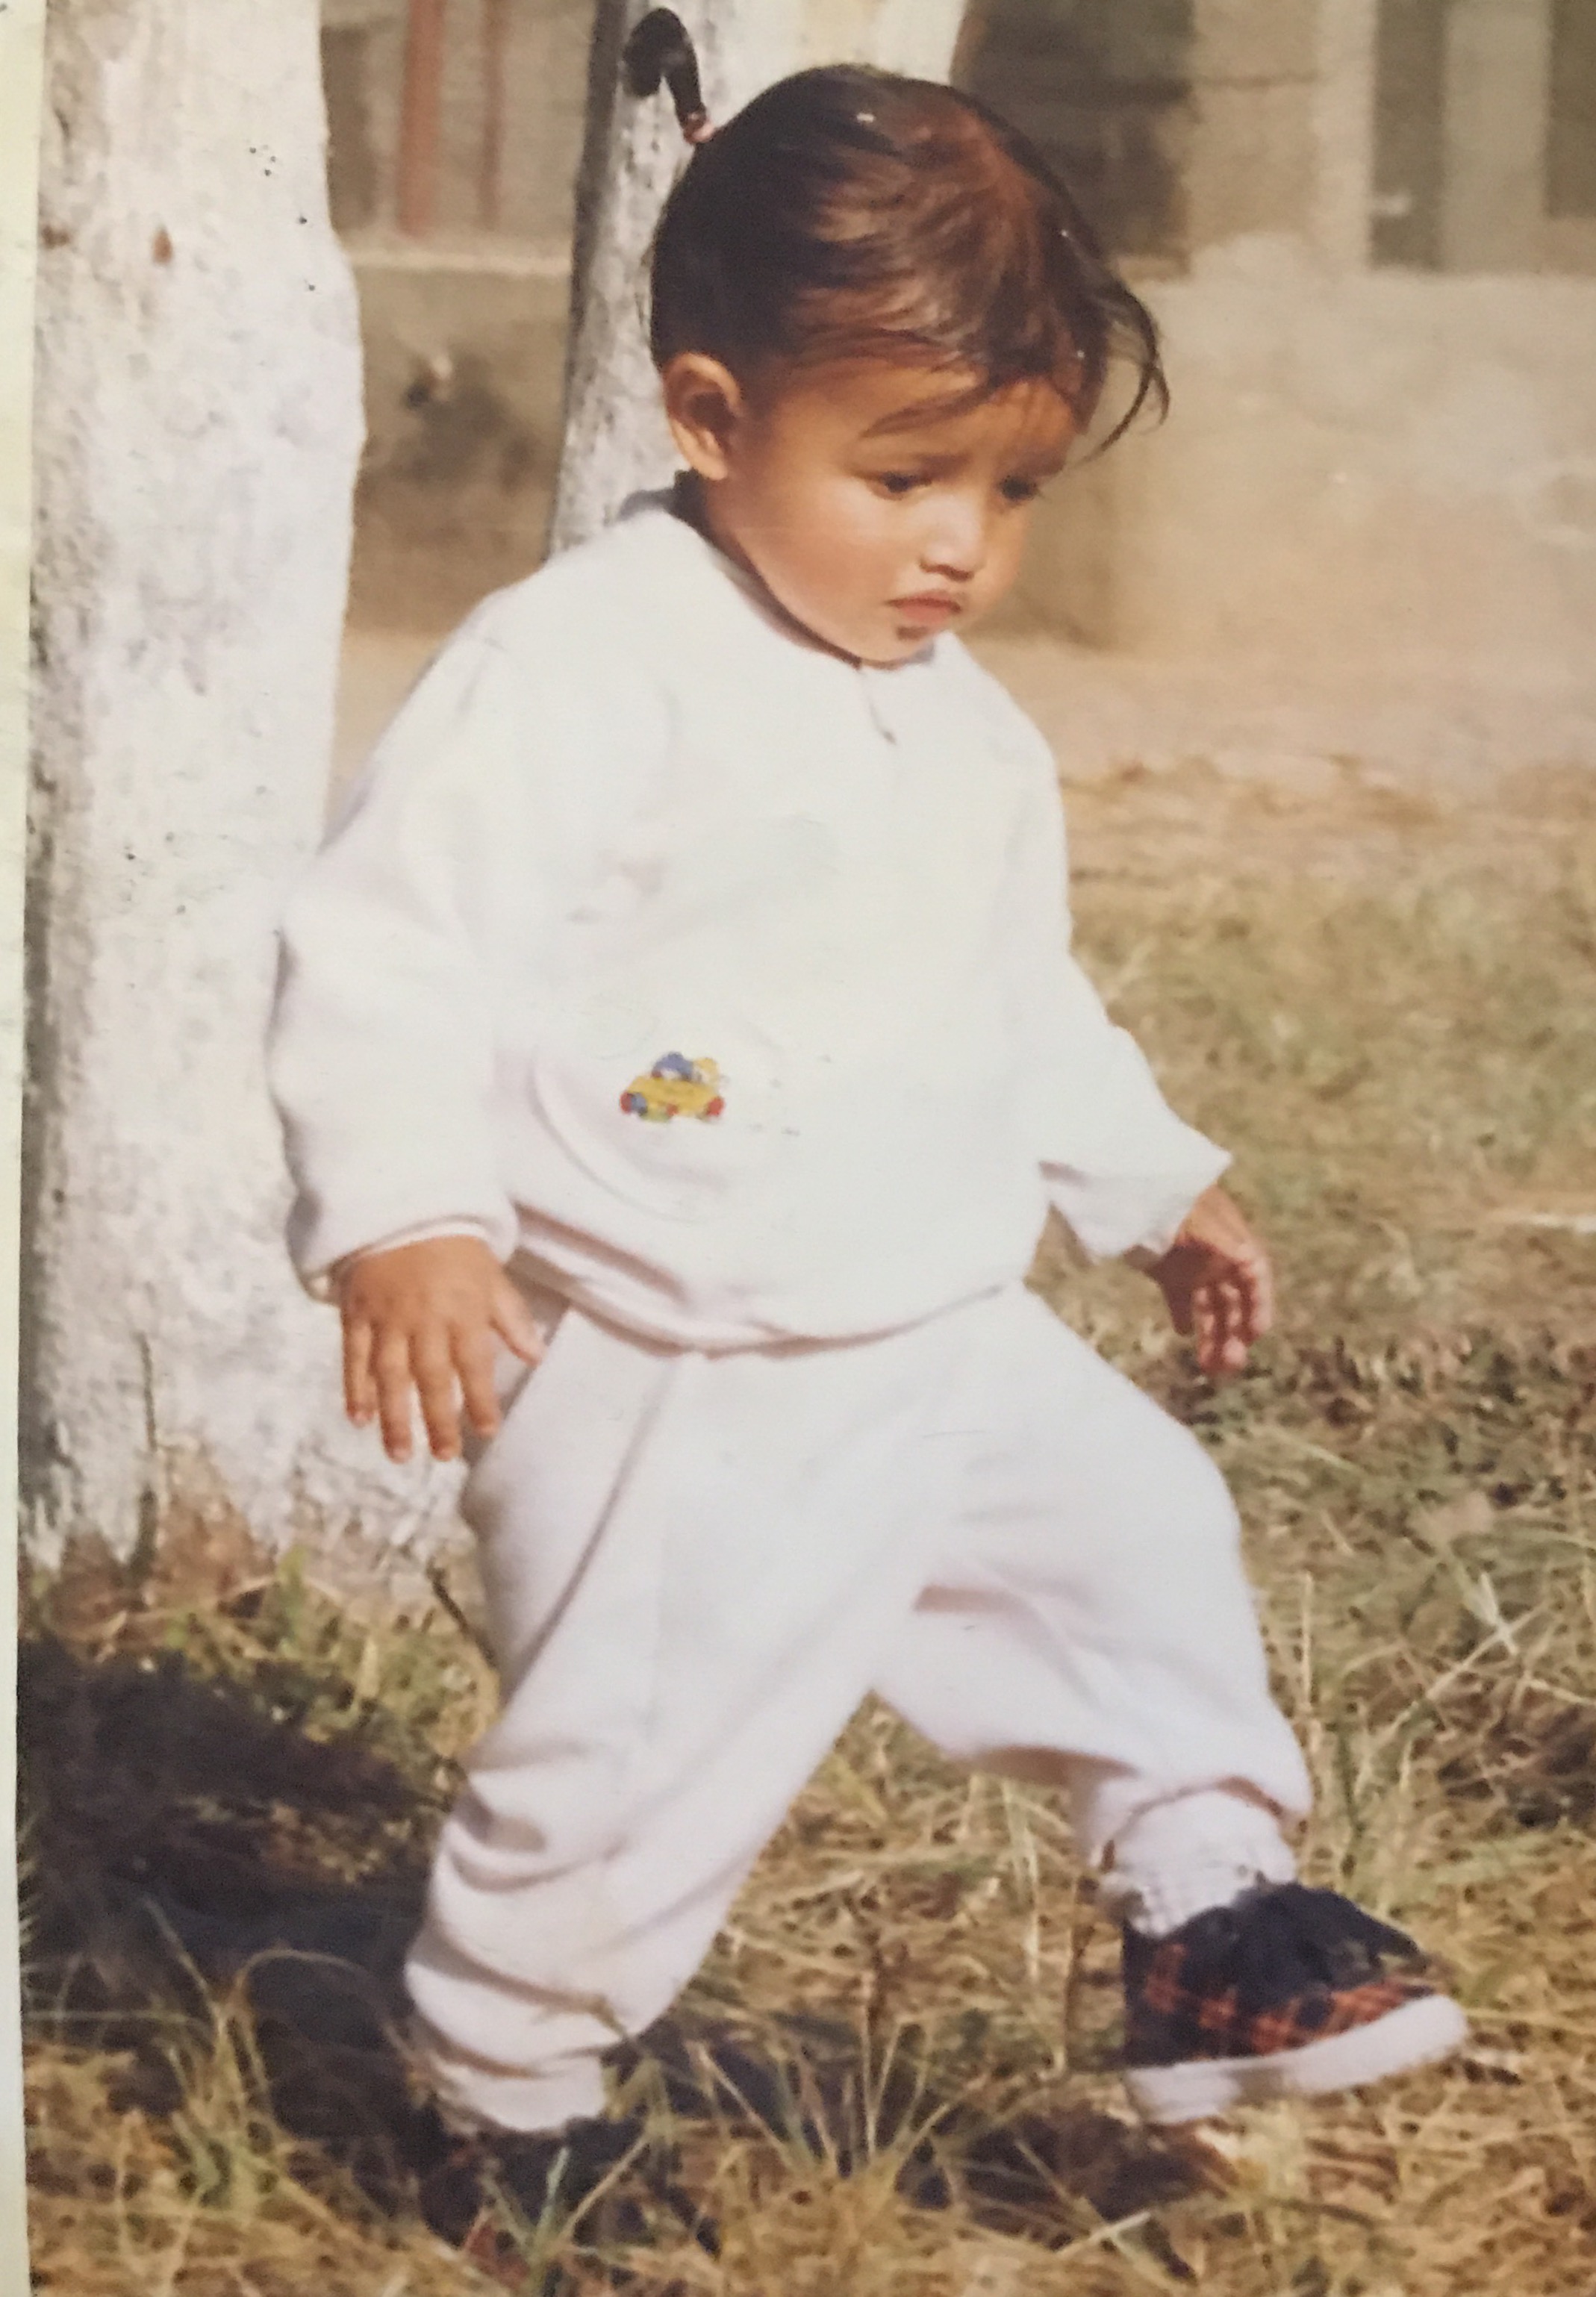 Priya at her second year - 1992 in Kathmandu 